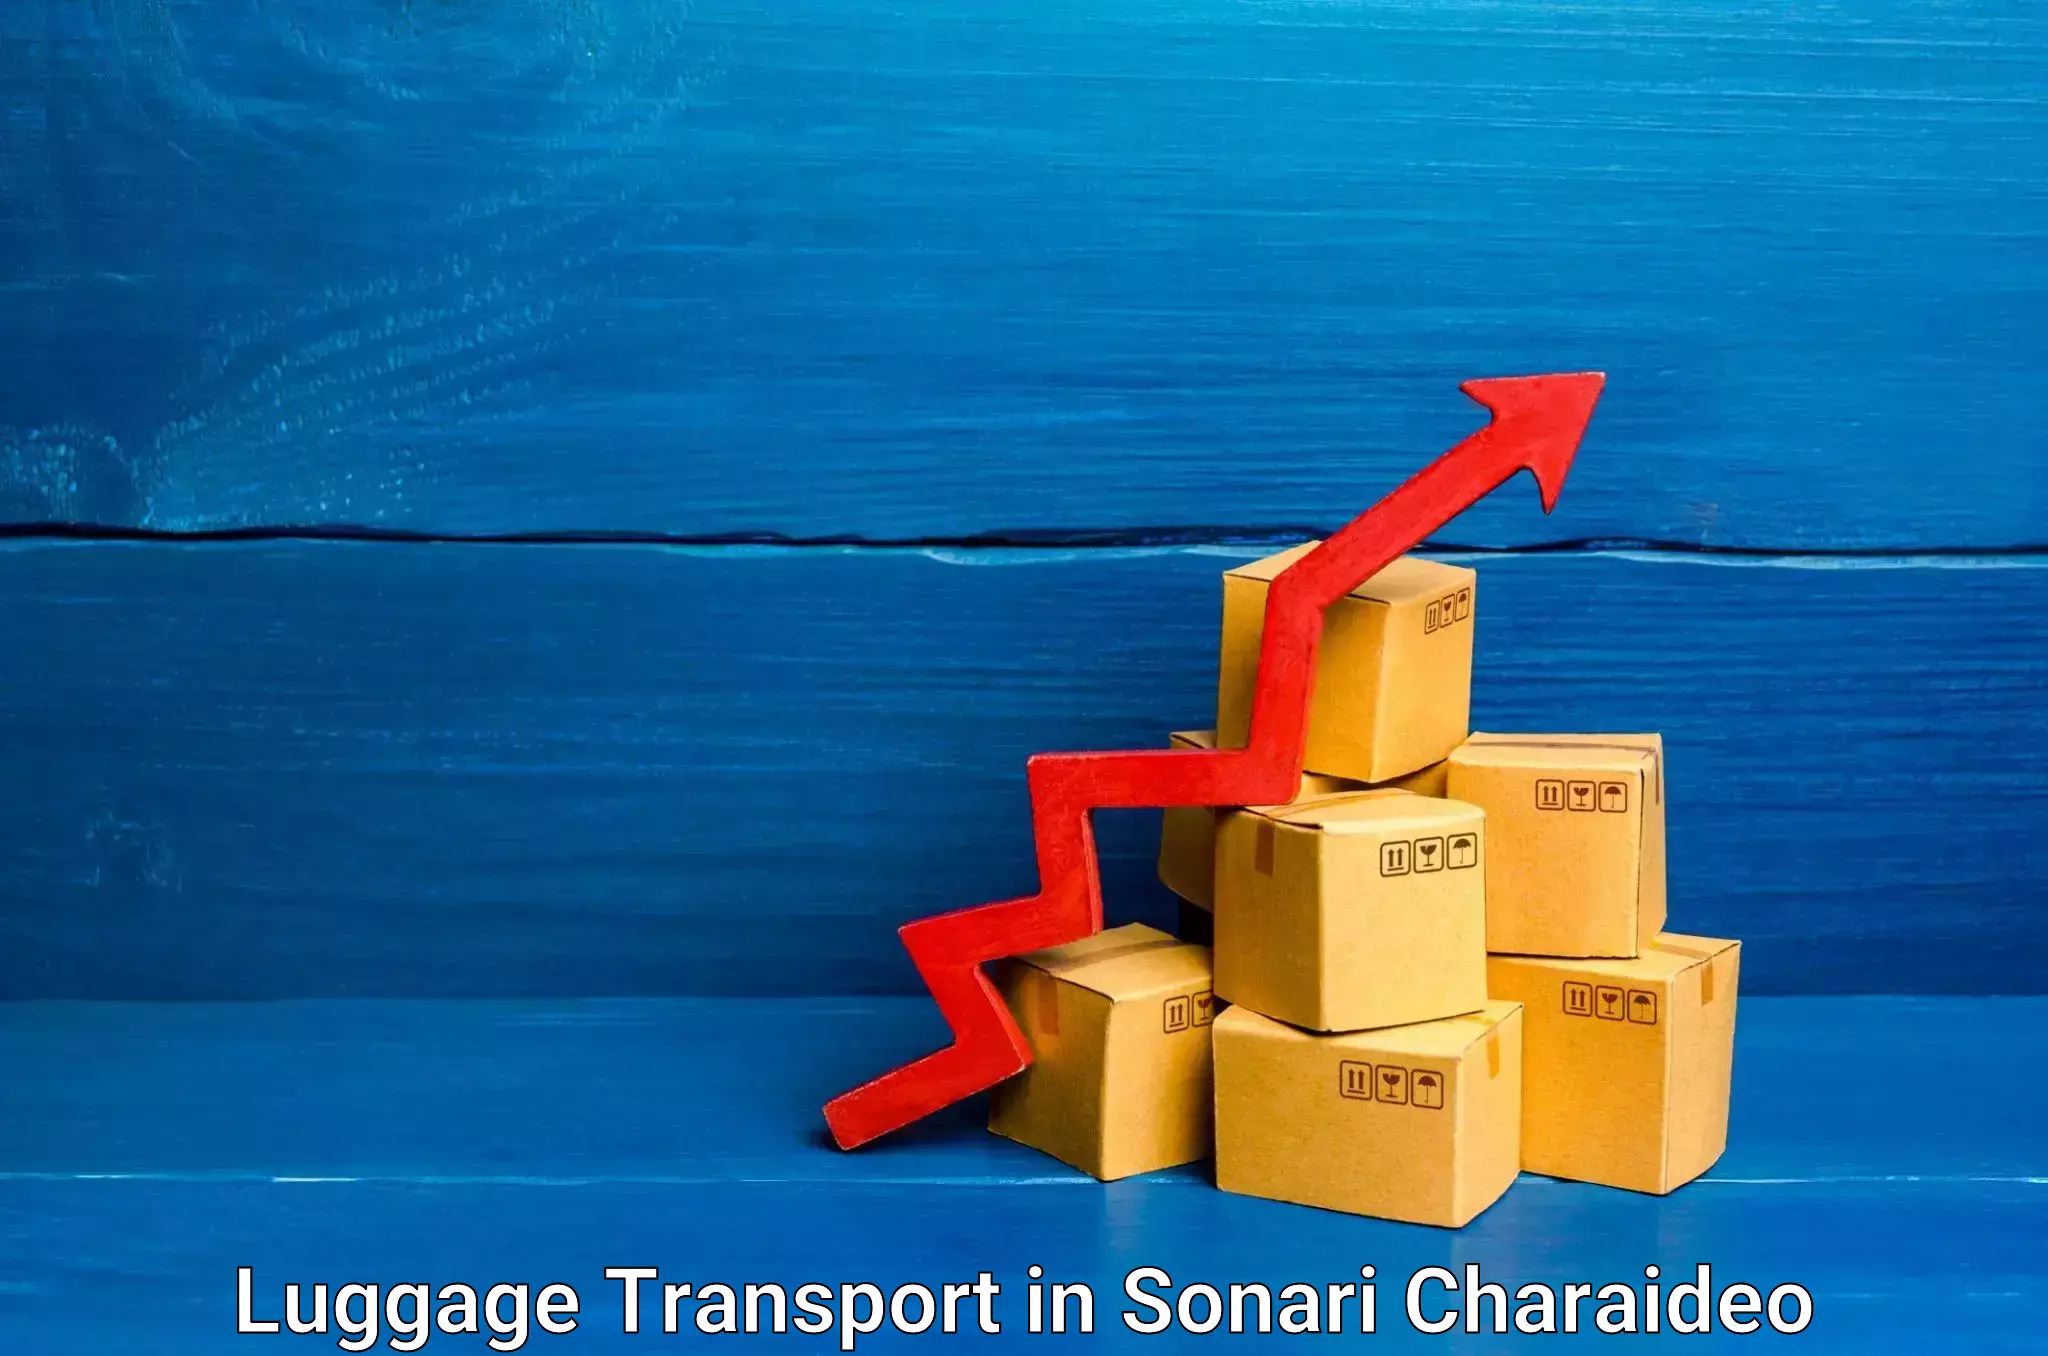 Luggage transfer service in Sonari Charaideo